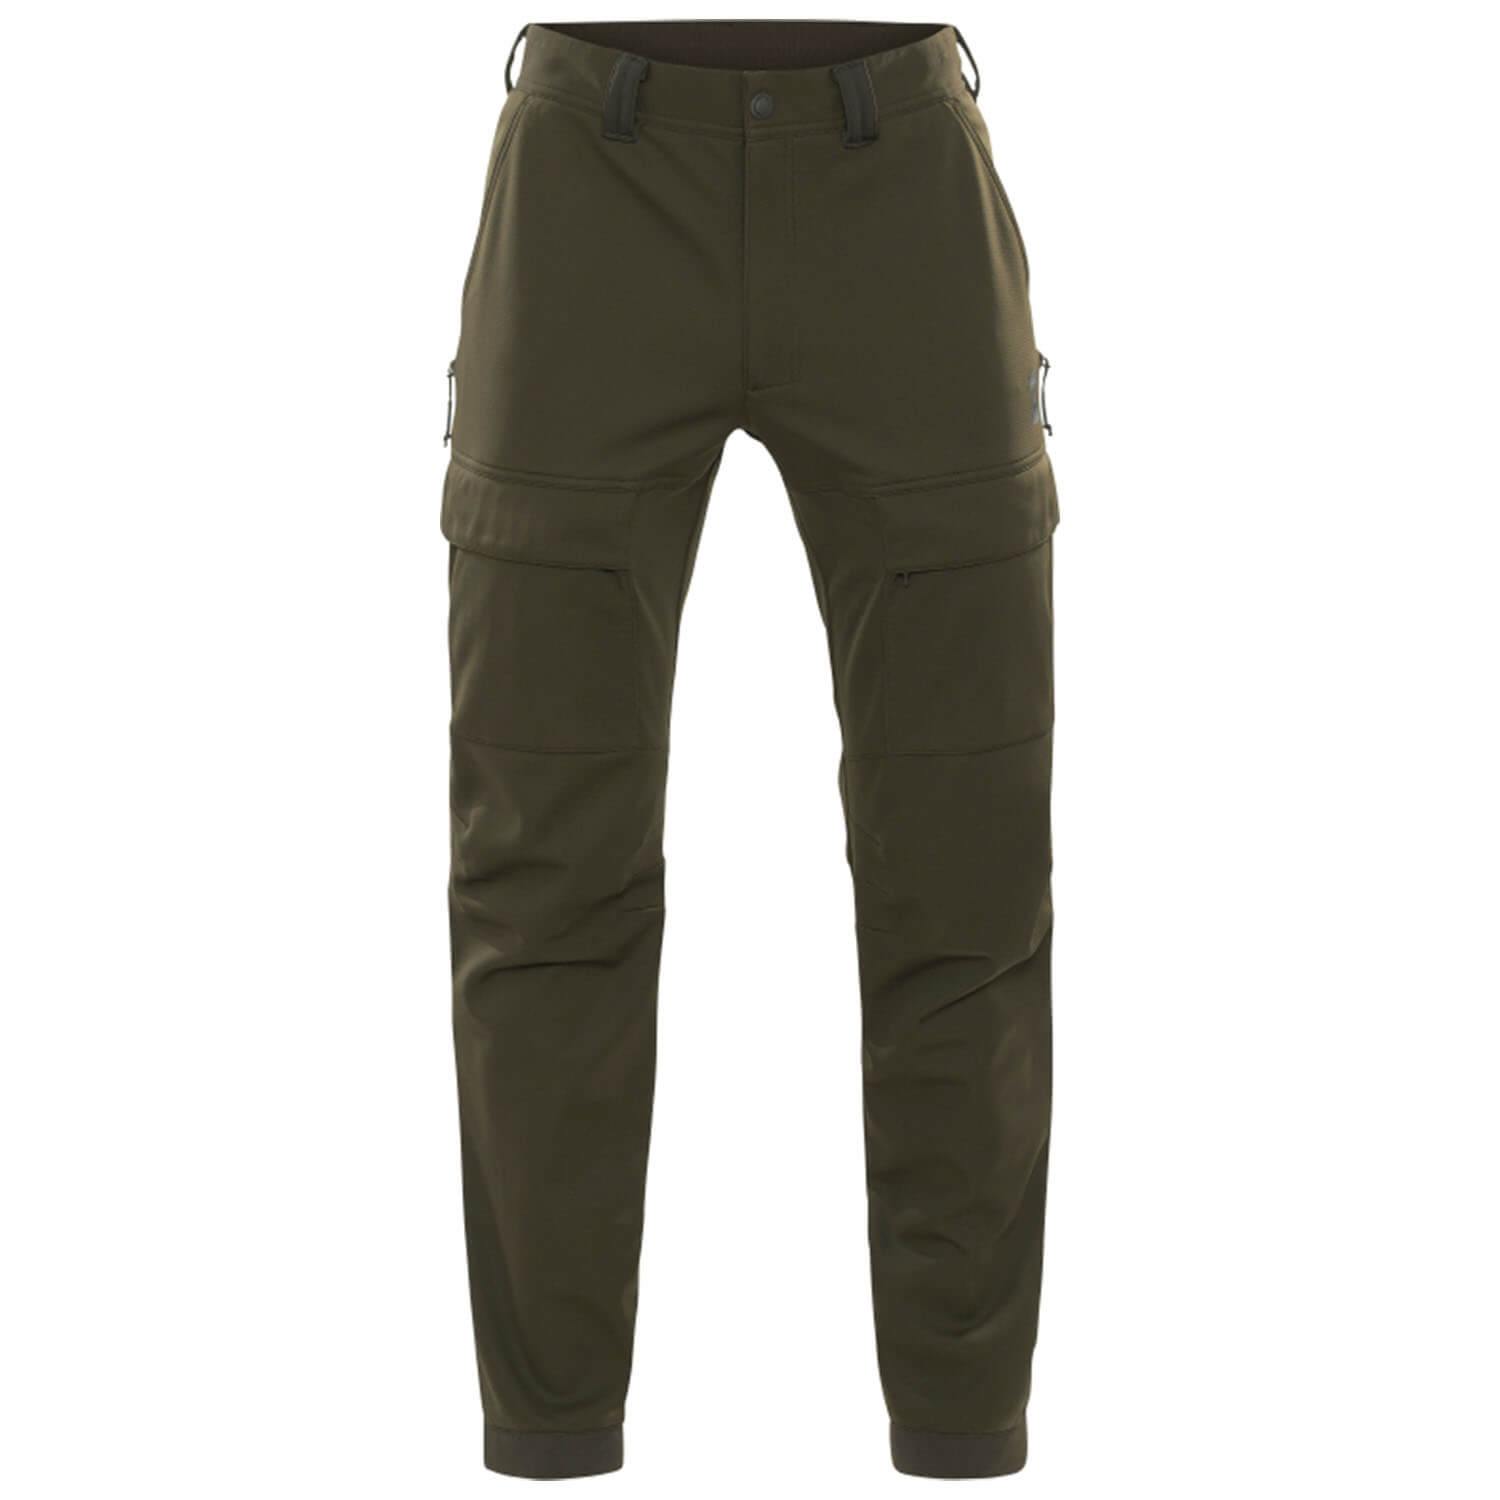 Härkila pants Deer Stalker Light (willow green/shadow brown) - Hunting Trousers